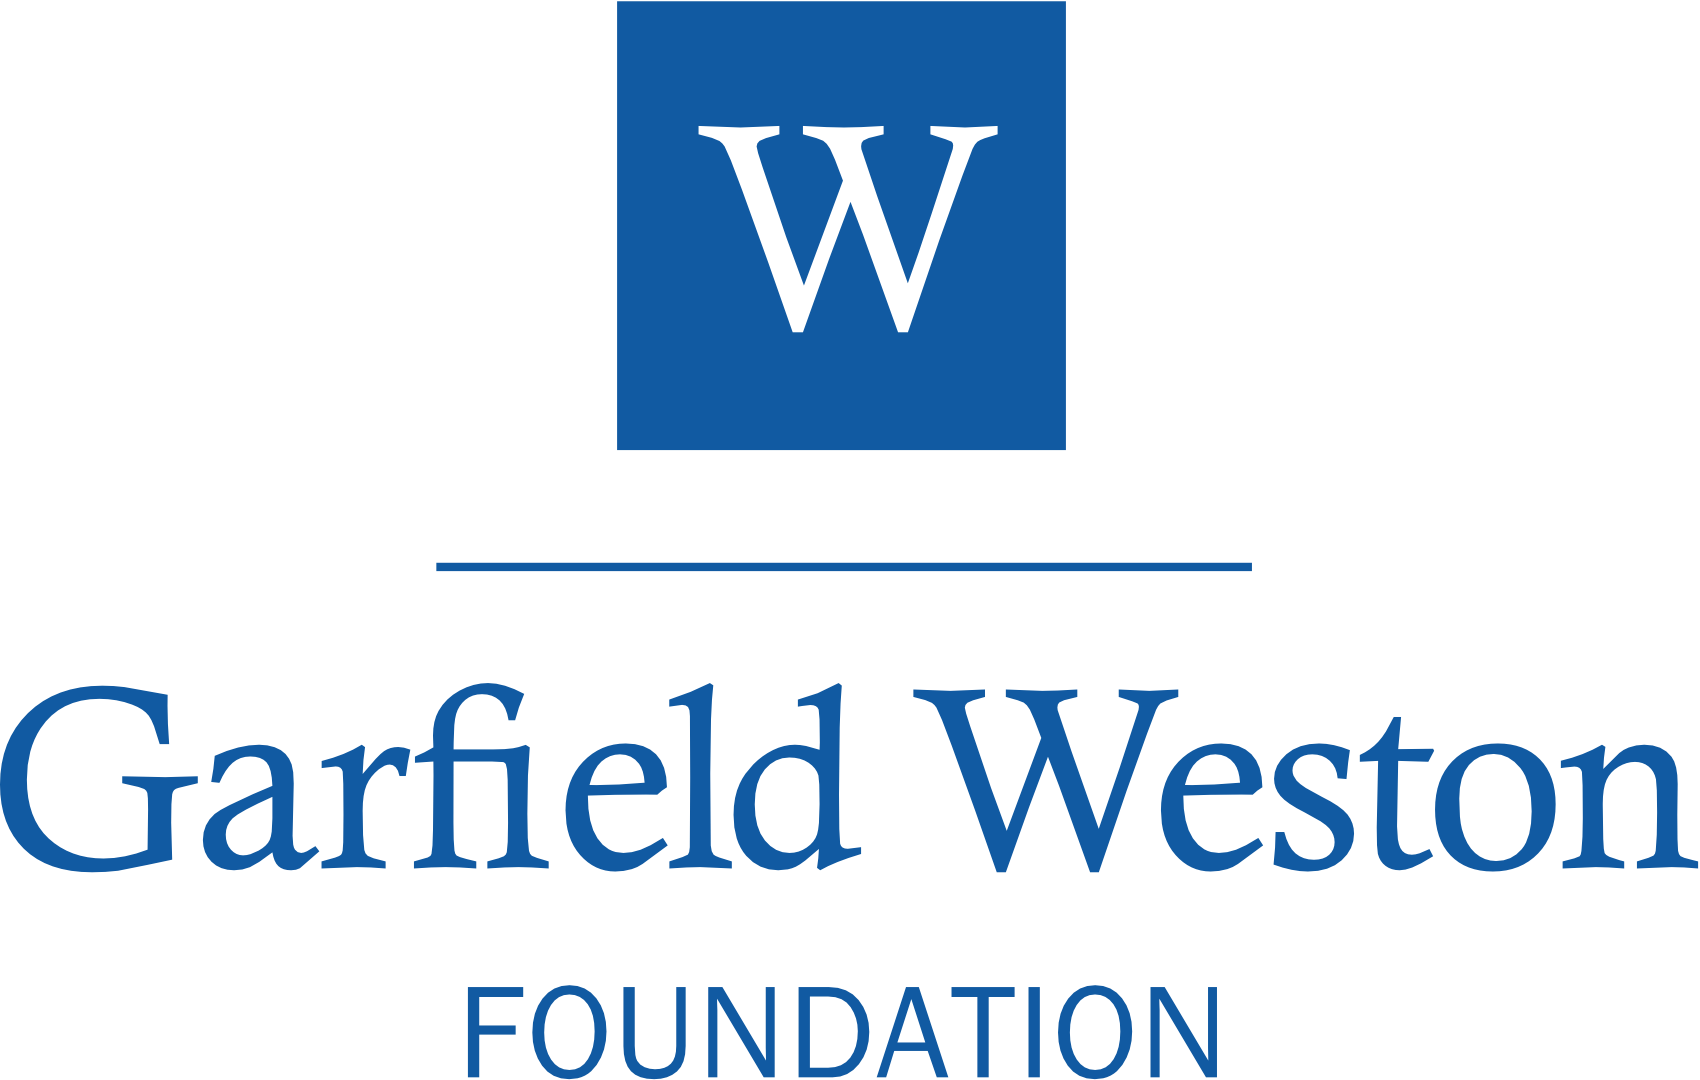 The Garfield Weston Foundation logo